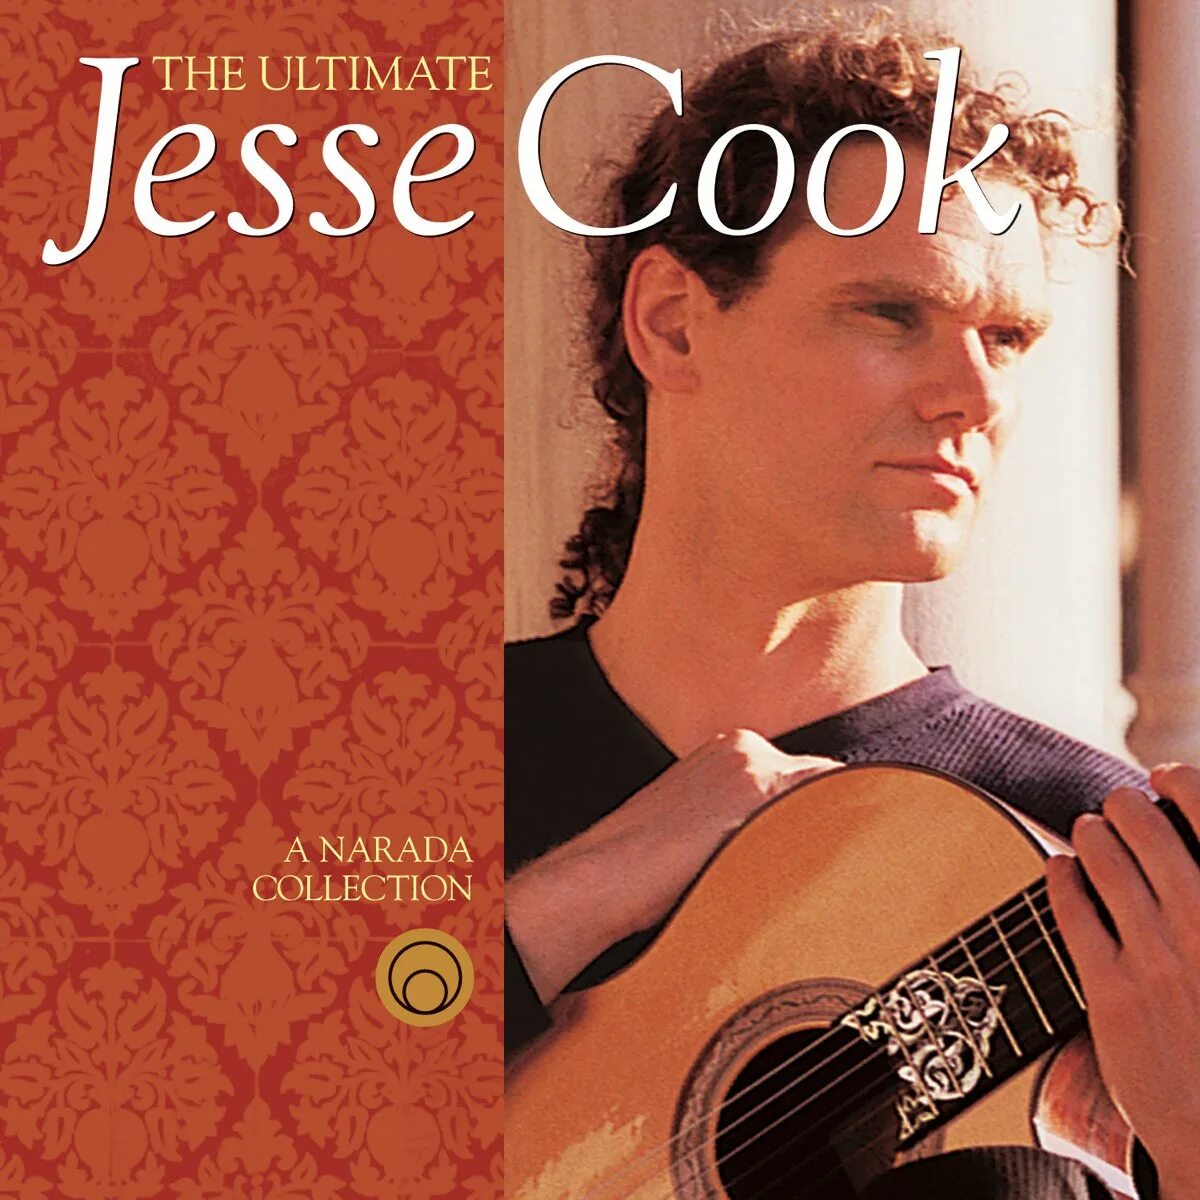 Tempest Jesse Cook. Jesse обложка. Jesse Cook Gravity. Jesse Cook guitarist.